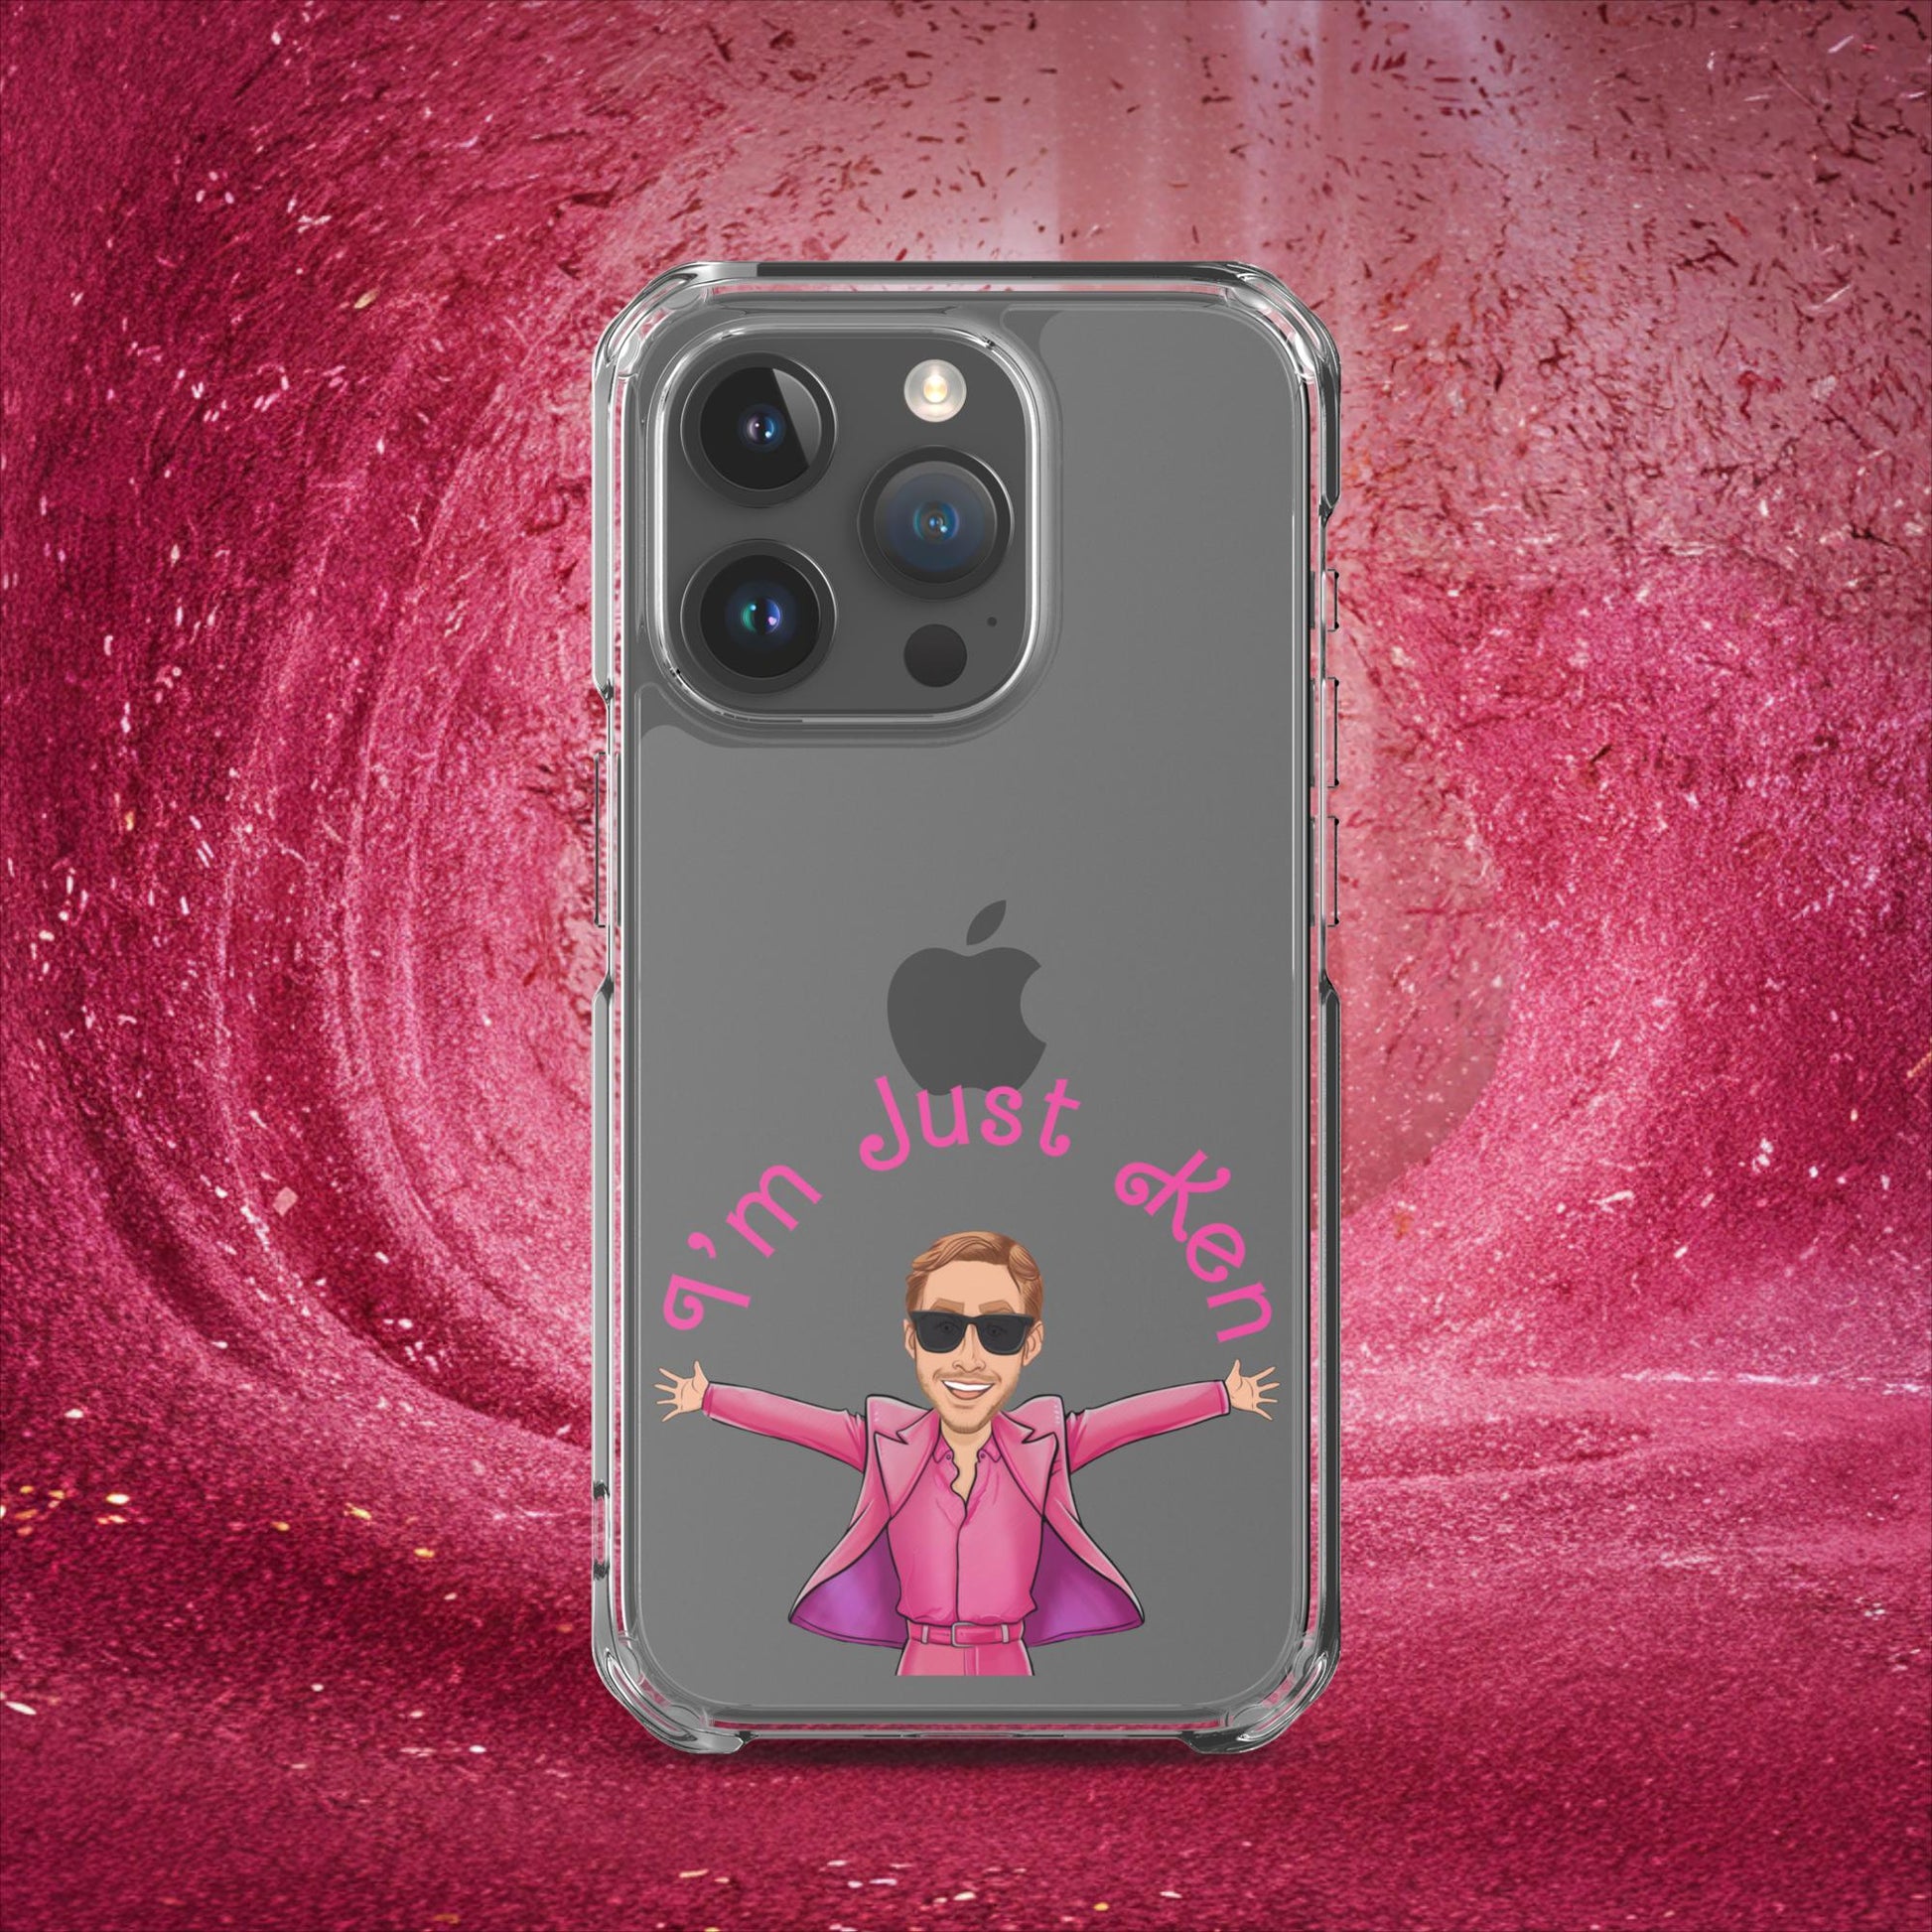 Ken Barbie Ryan Gosling I'm Just Ken Clear Case for iPhone Next Cult Brand